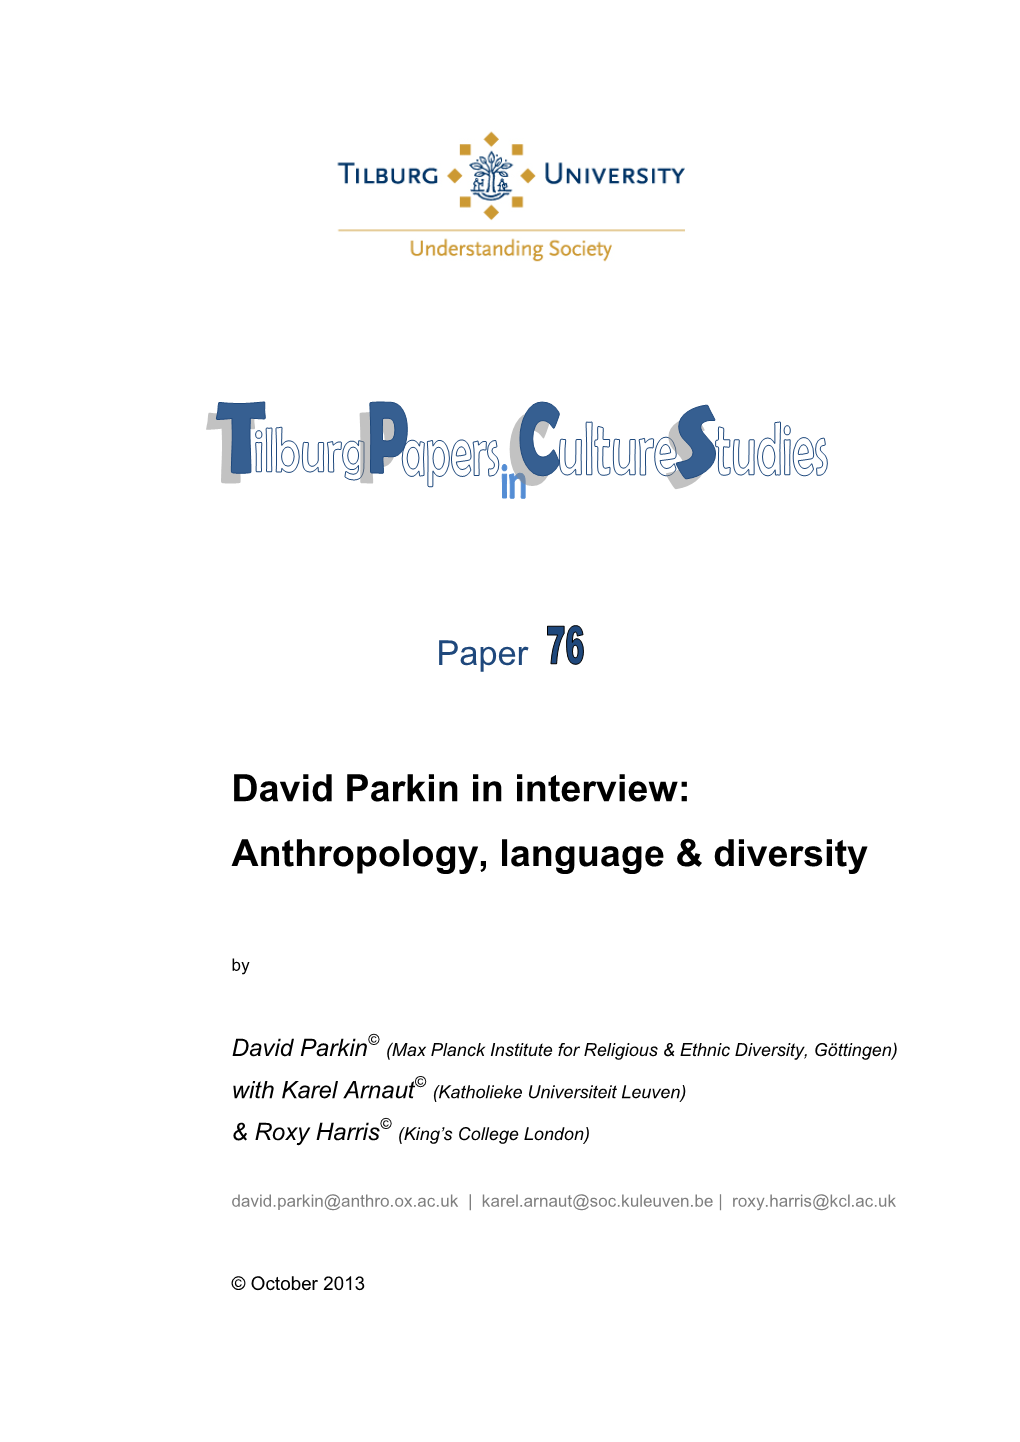 David Parkin in Interview: Anthropology, Language & Diversity